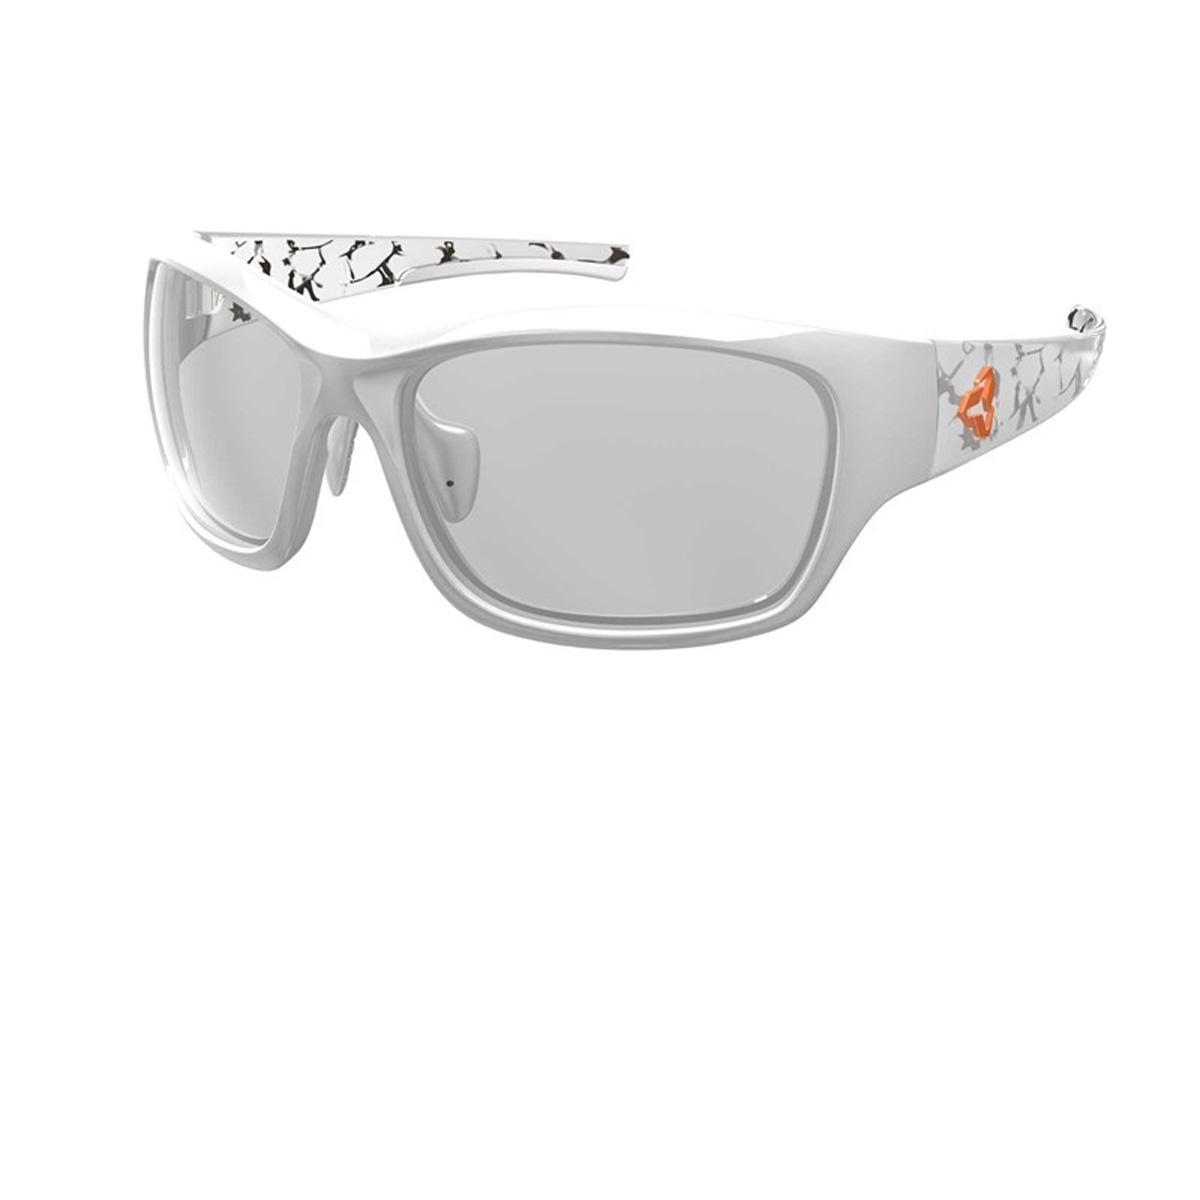 Ryders Eyewear Khyber Anti-Fog Sunglasses (WHITE DECAL / CLEAR LENS ANTI-FOG) - image 1 of 1